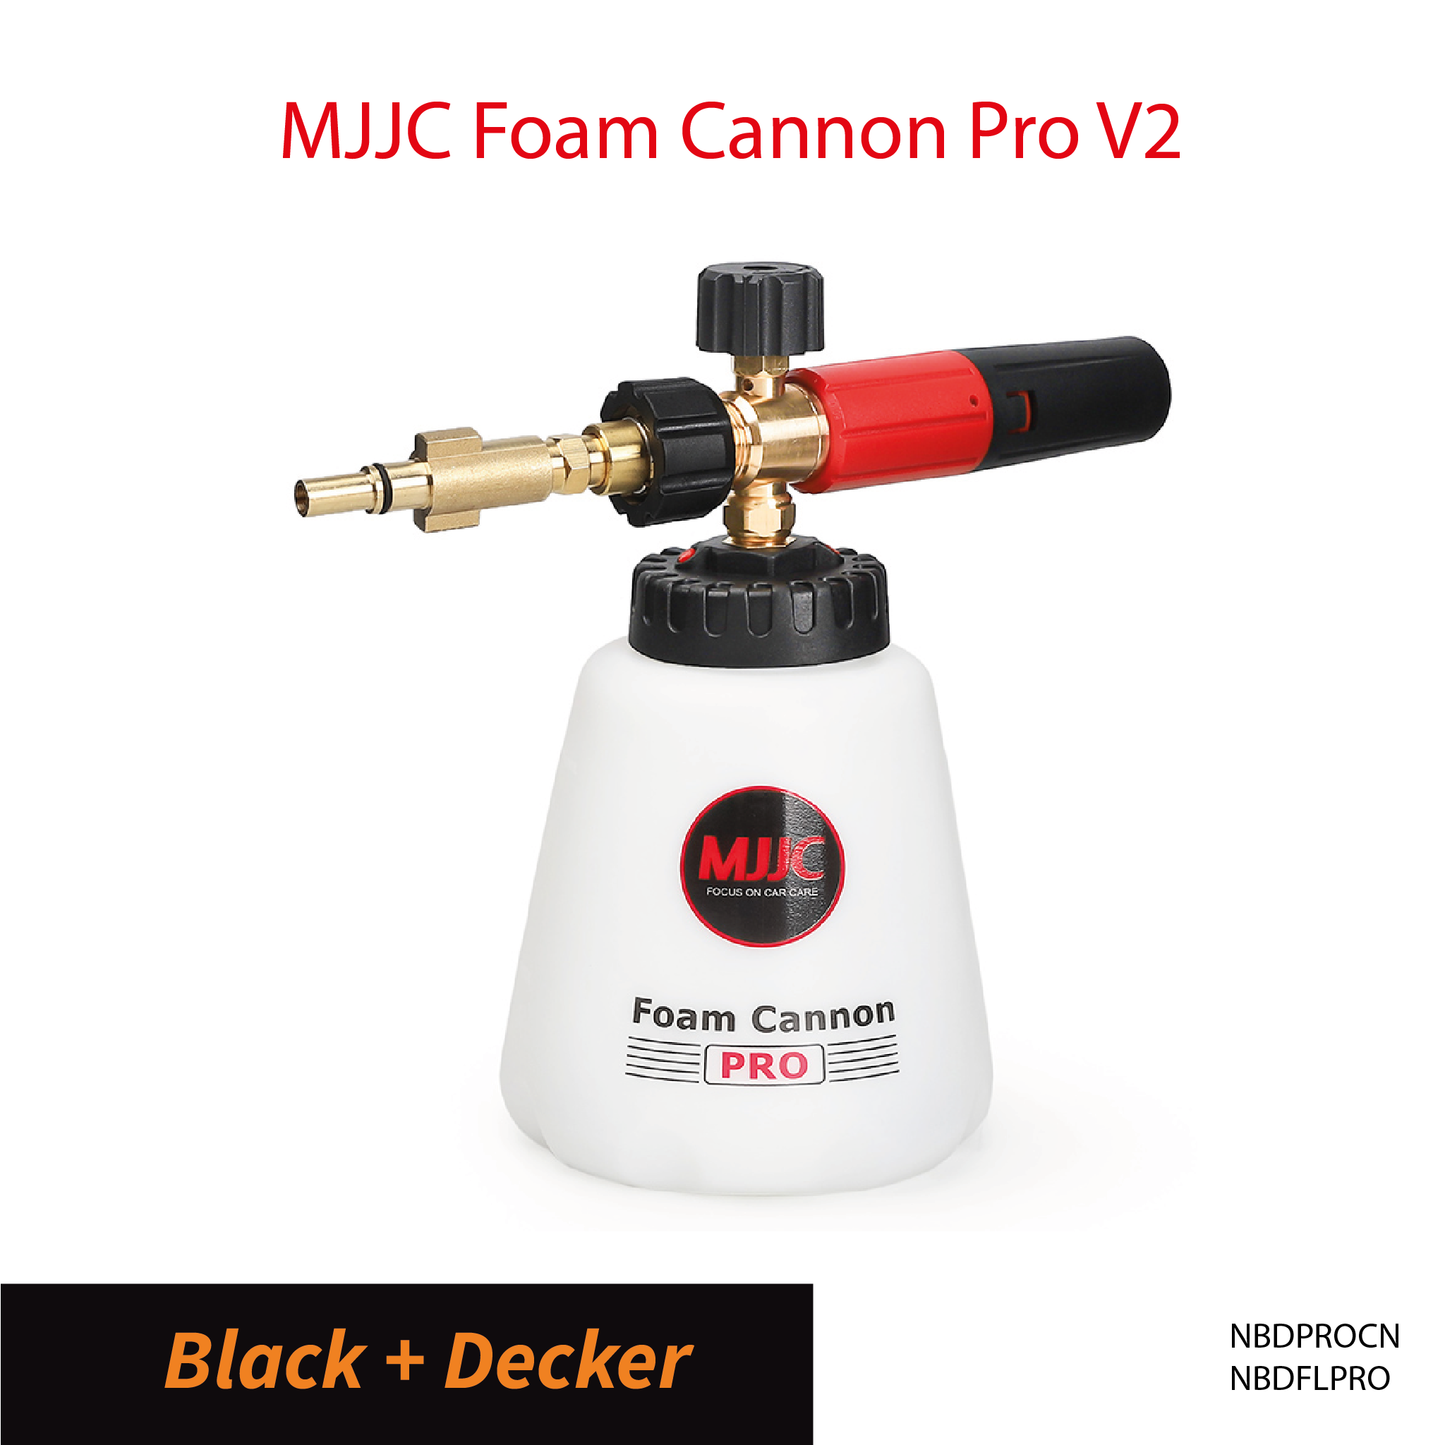 Black and Decker pressure washer - MJJC Foam Cannon Pro V2 (Pressure Washer Snow Foam Lance Gun)